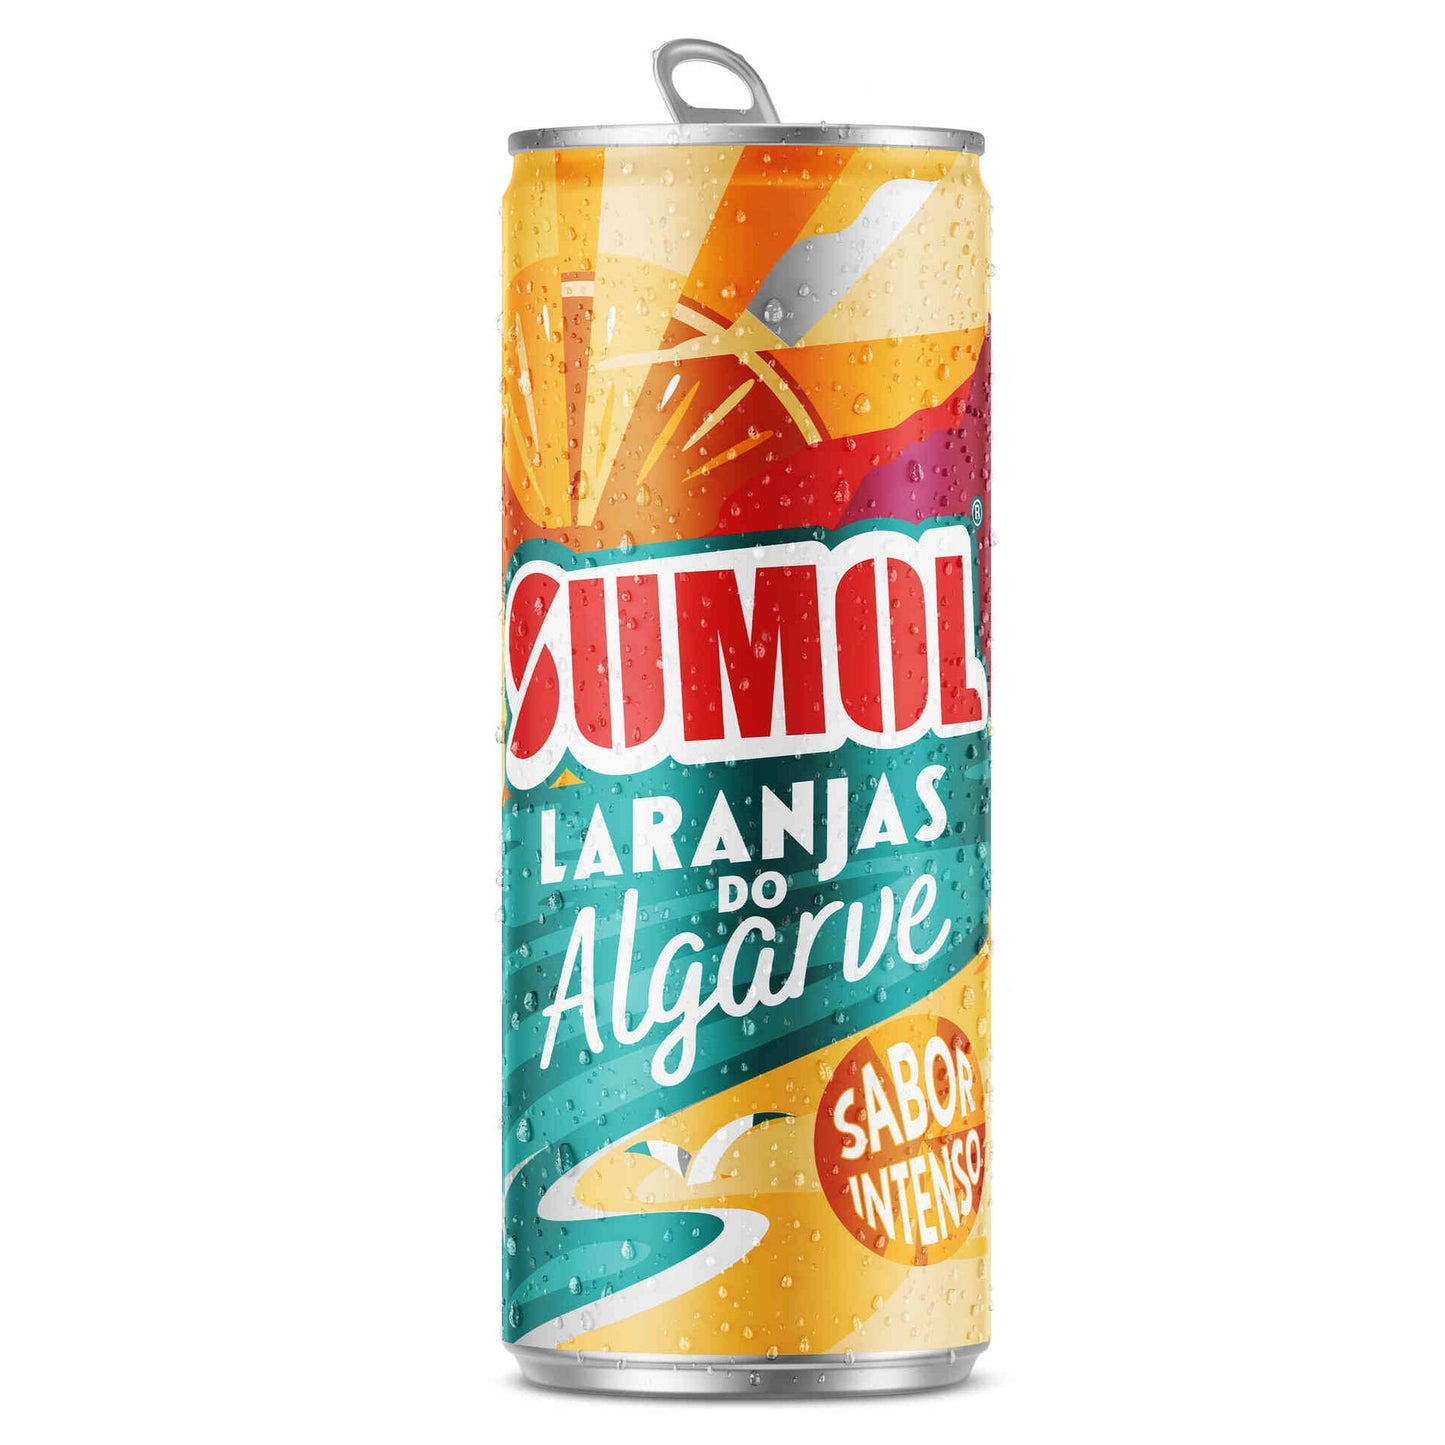 Sumol Orange 330ml